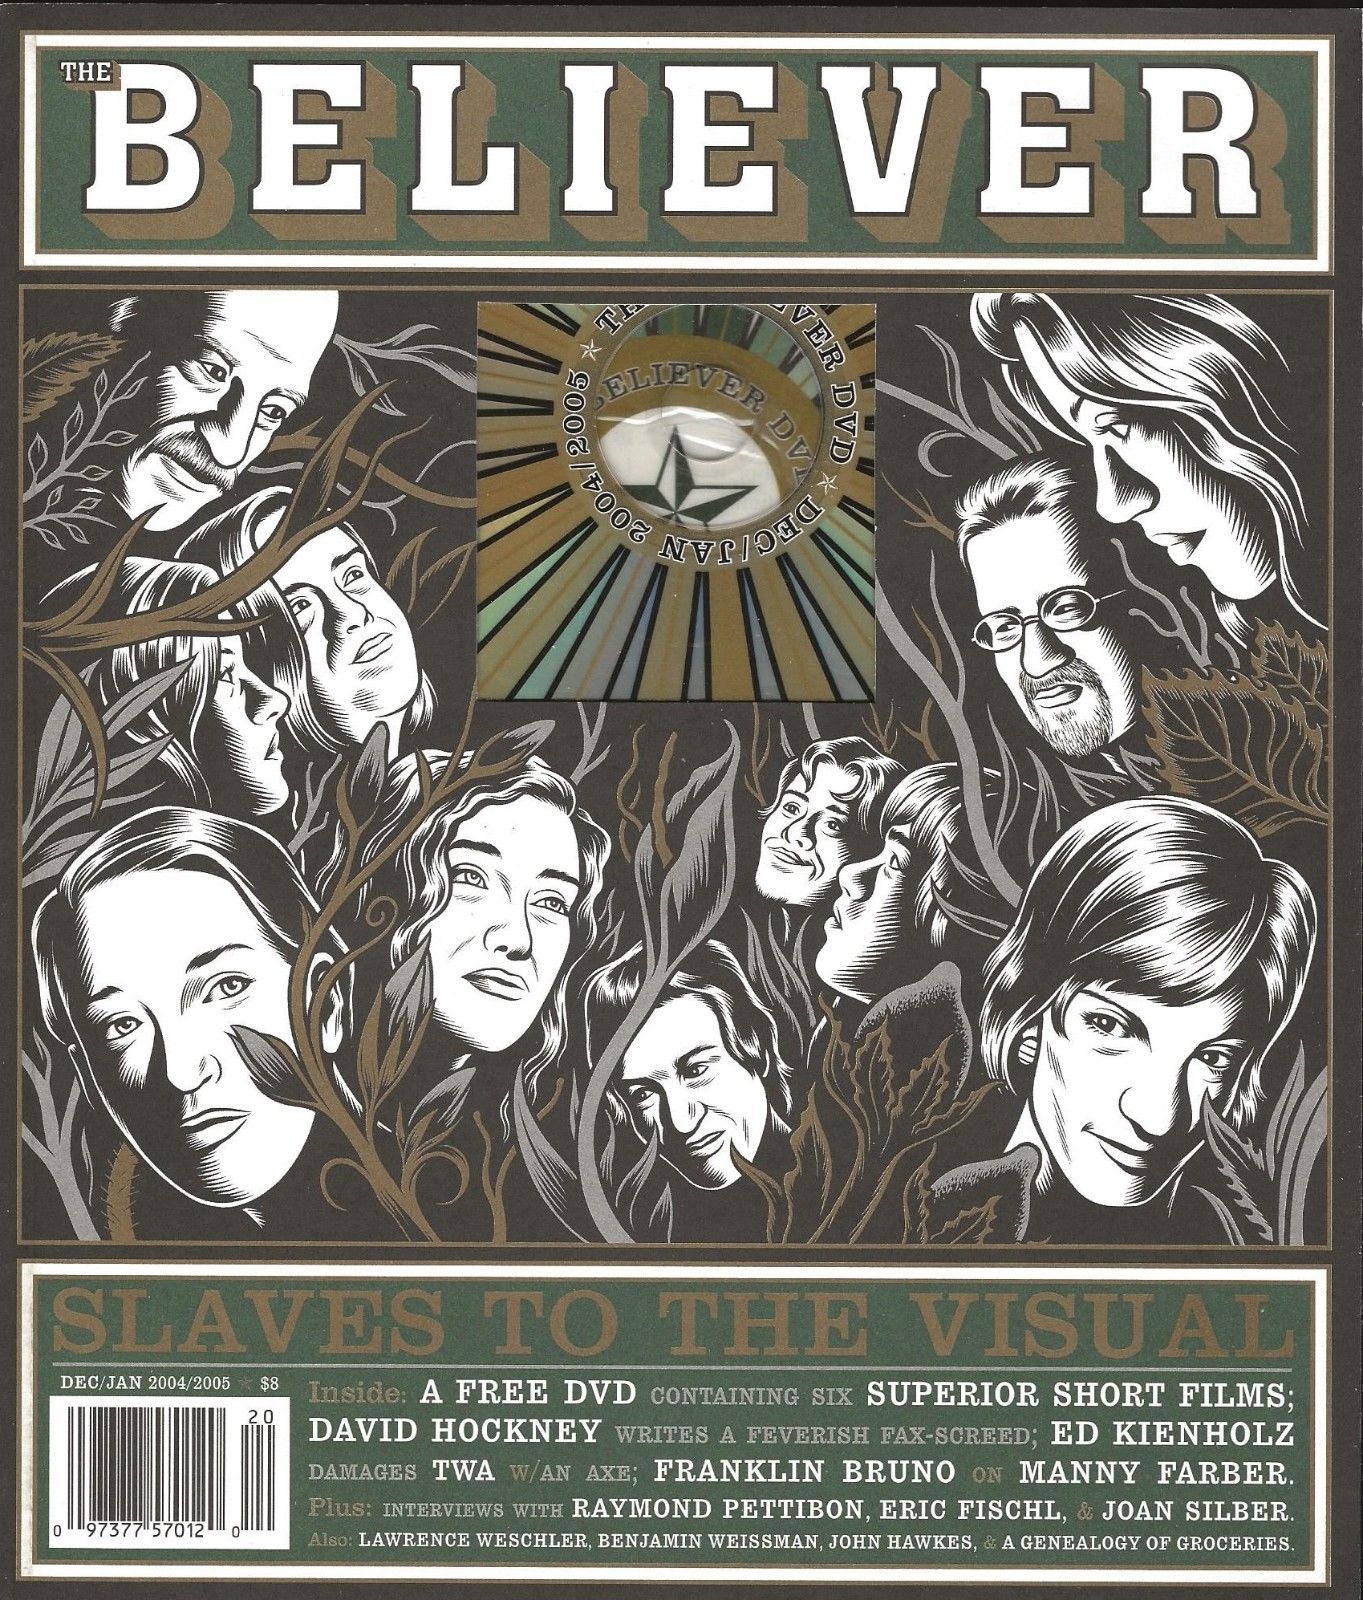 Believer Issue No. 020, Vol. 2 No. 12, (Dec/Jan 2004/2005): Rhathymia